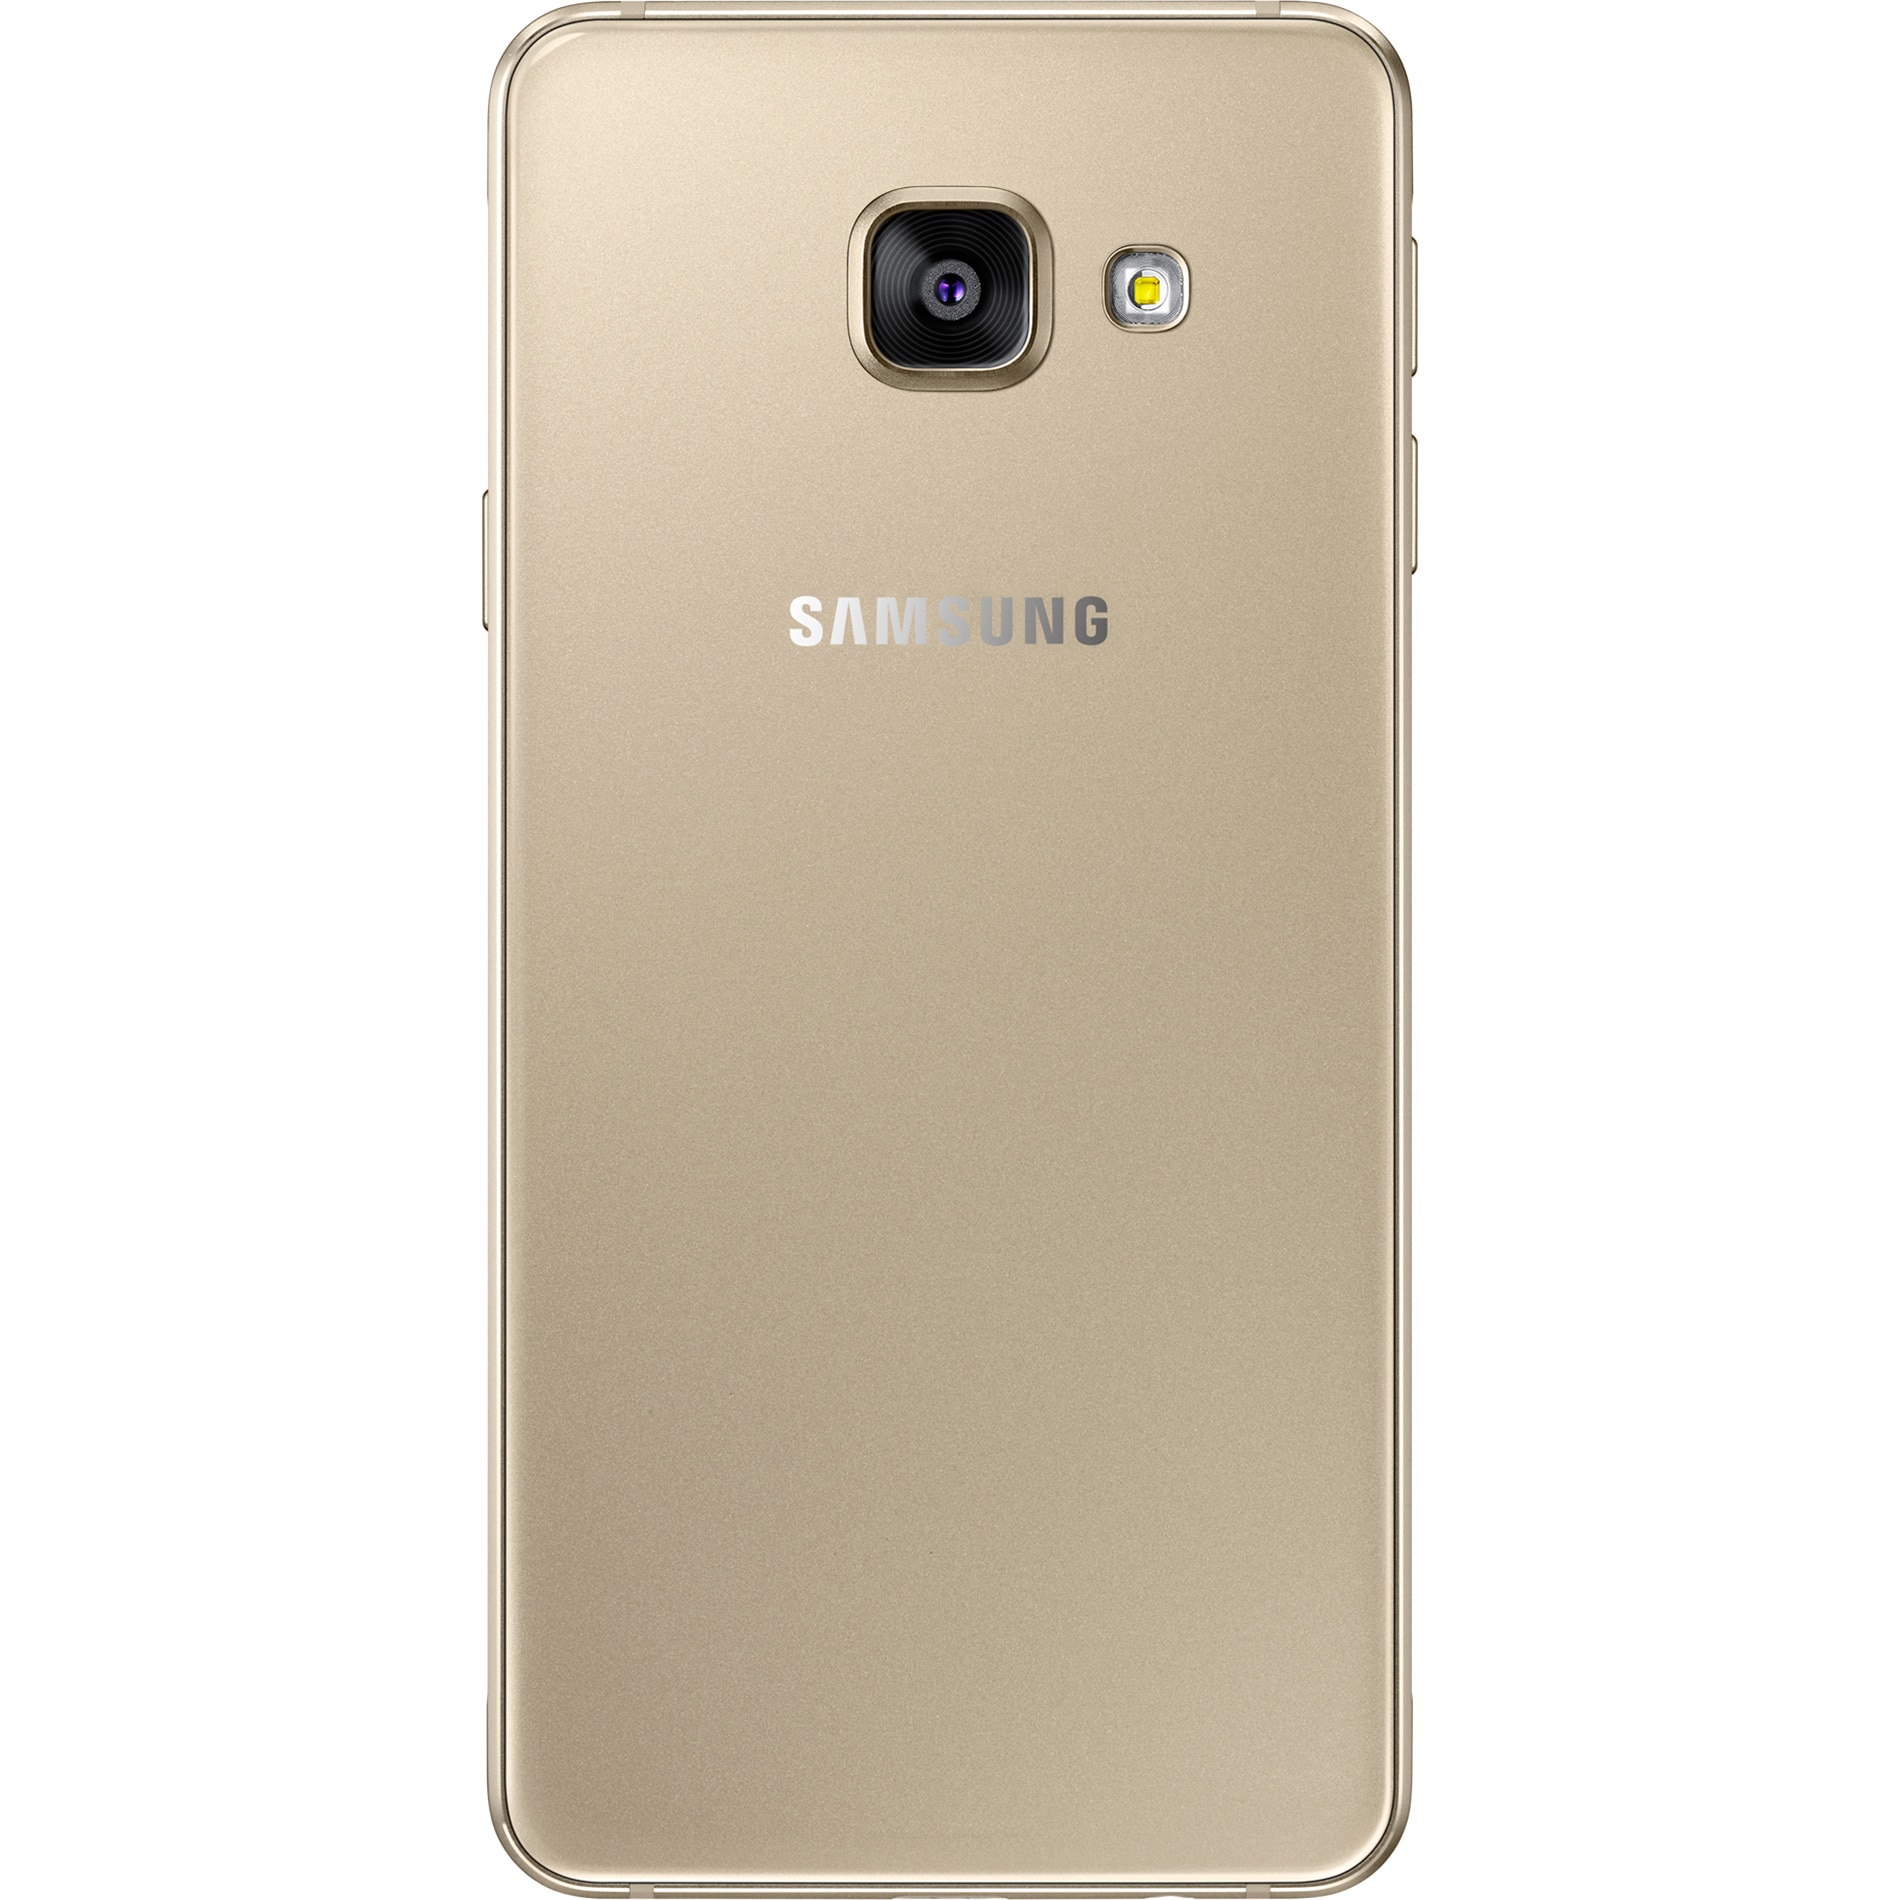 A5 gold. Samsung Galaxy a5 2016. Samsung Galaxy a5 (2016) SM-a510f. Samsung Galaxy a7 2016 Gold. Samsung Galaxy a3 2016.